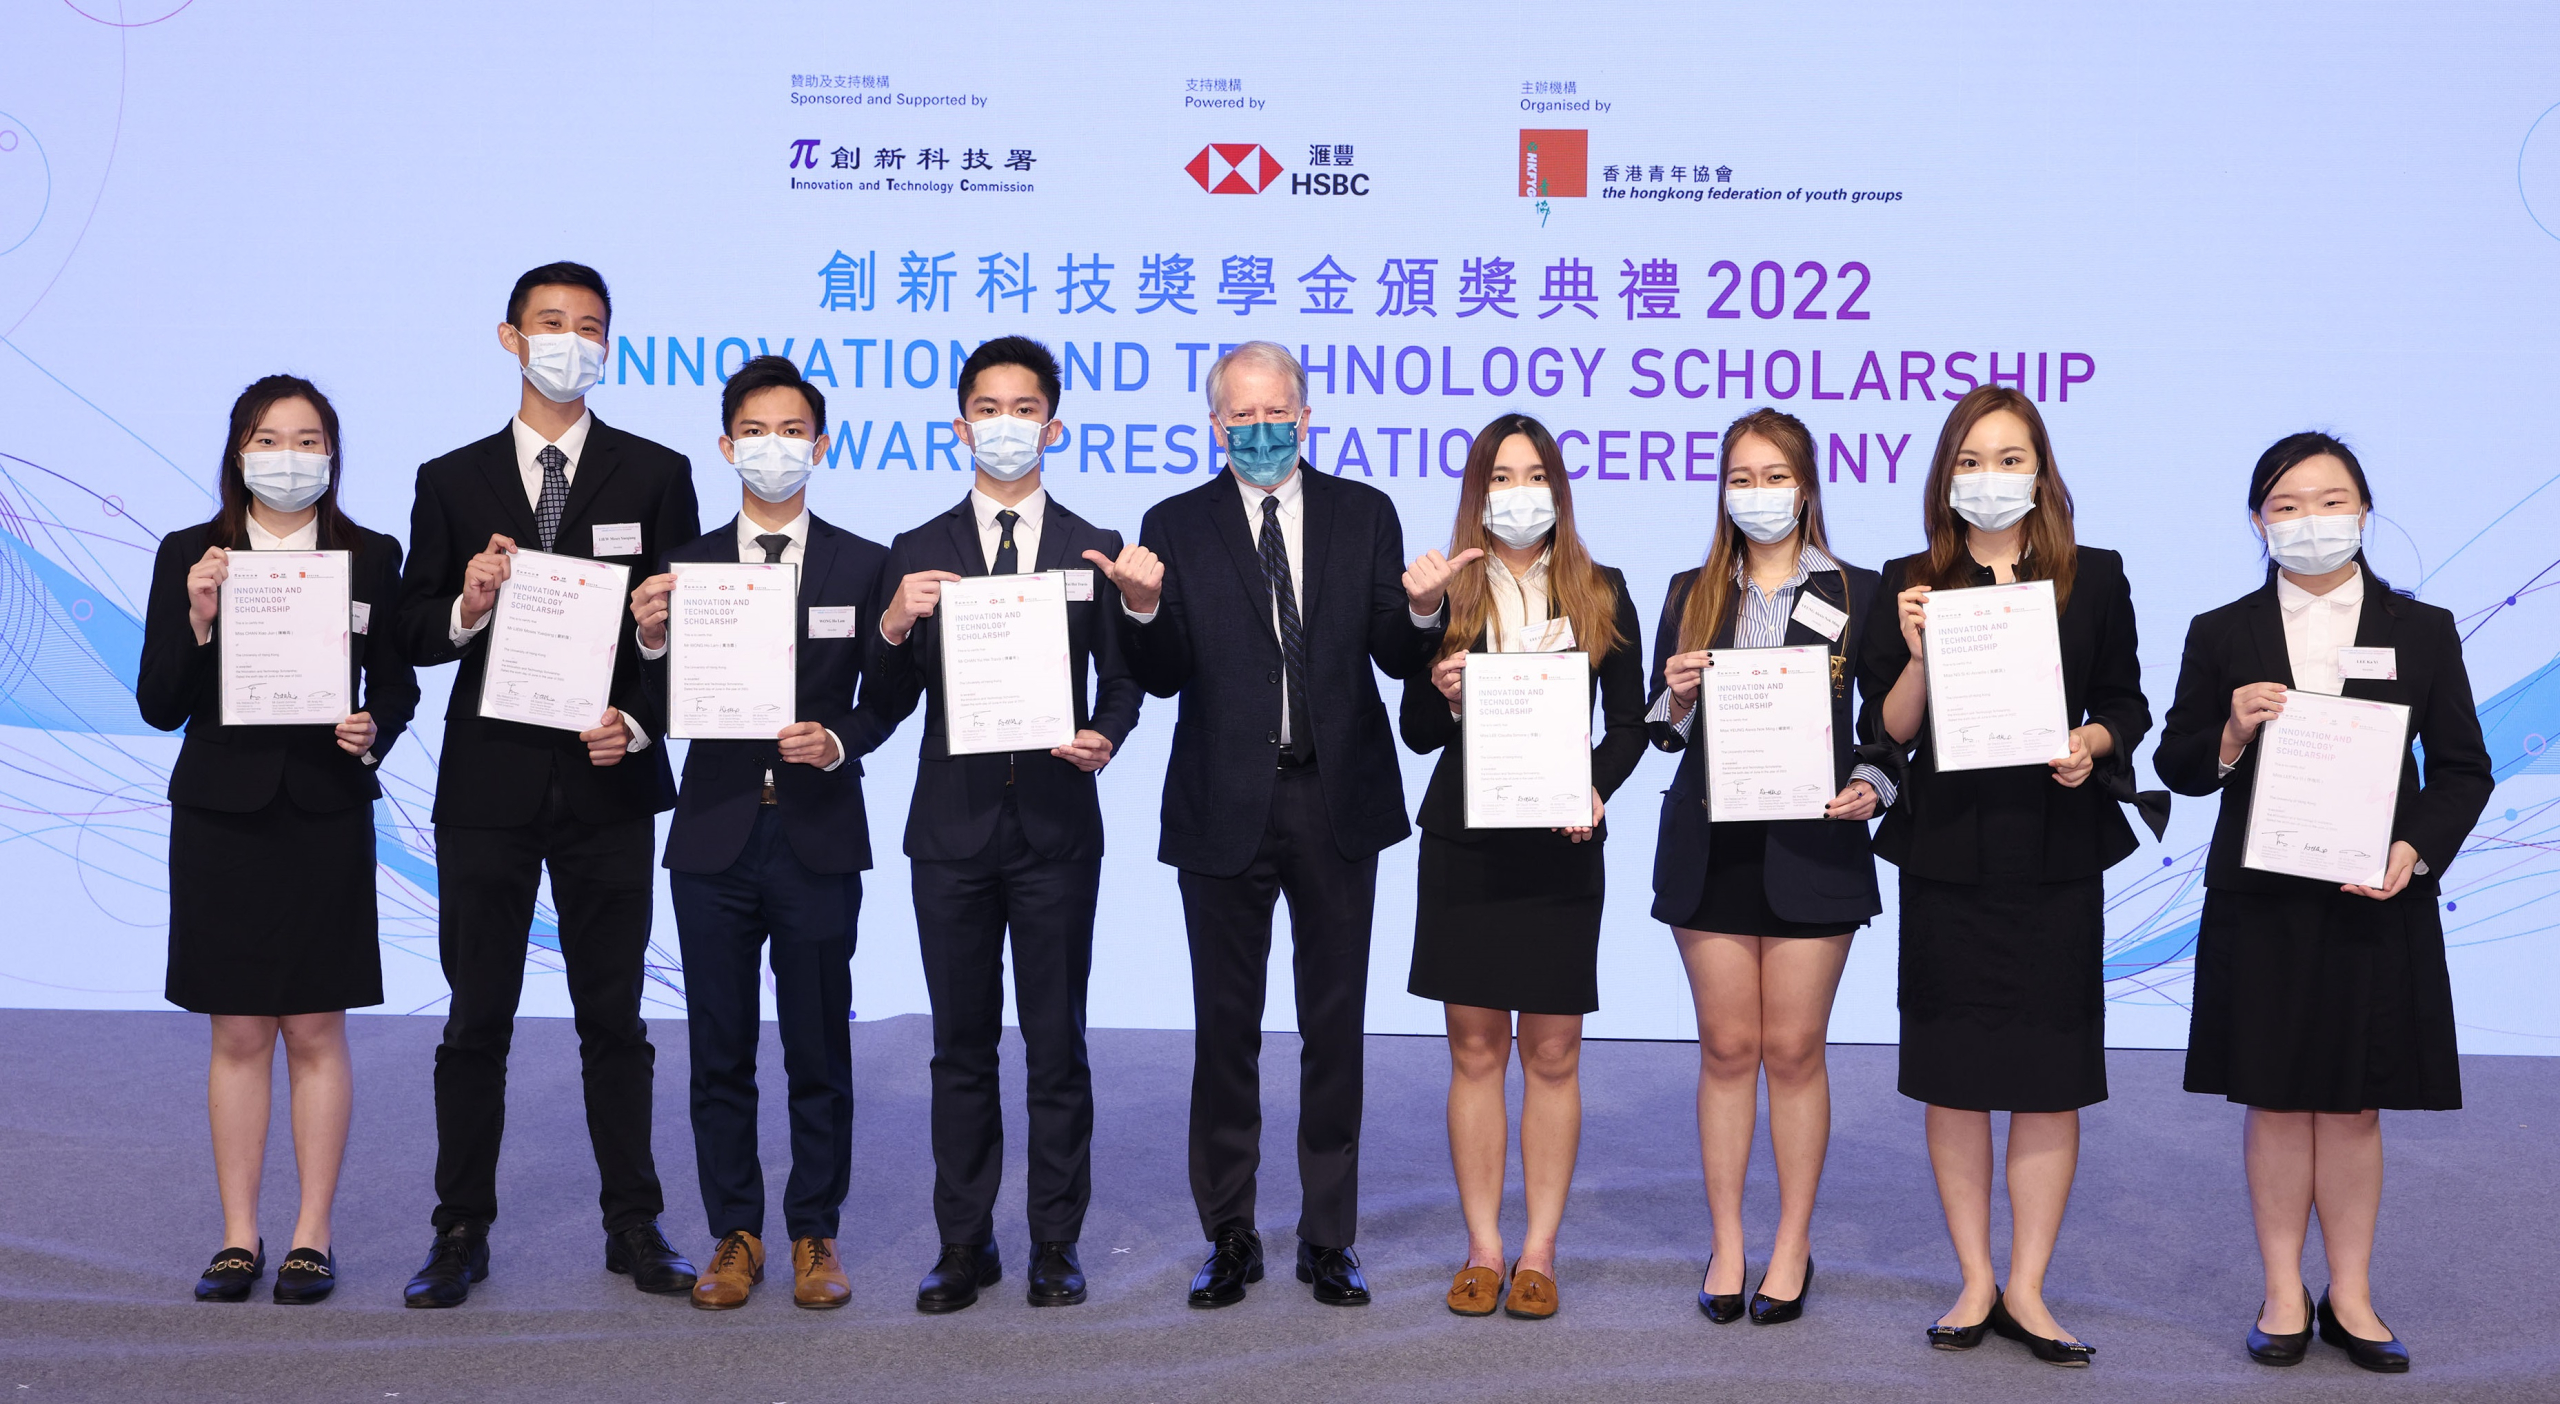 Group photo about Award Presentation Ceremony of Innovation and Technology Scholarship 2022